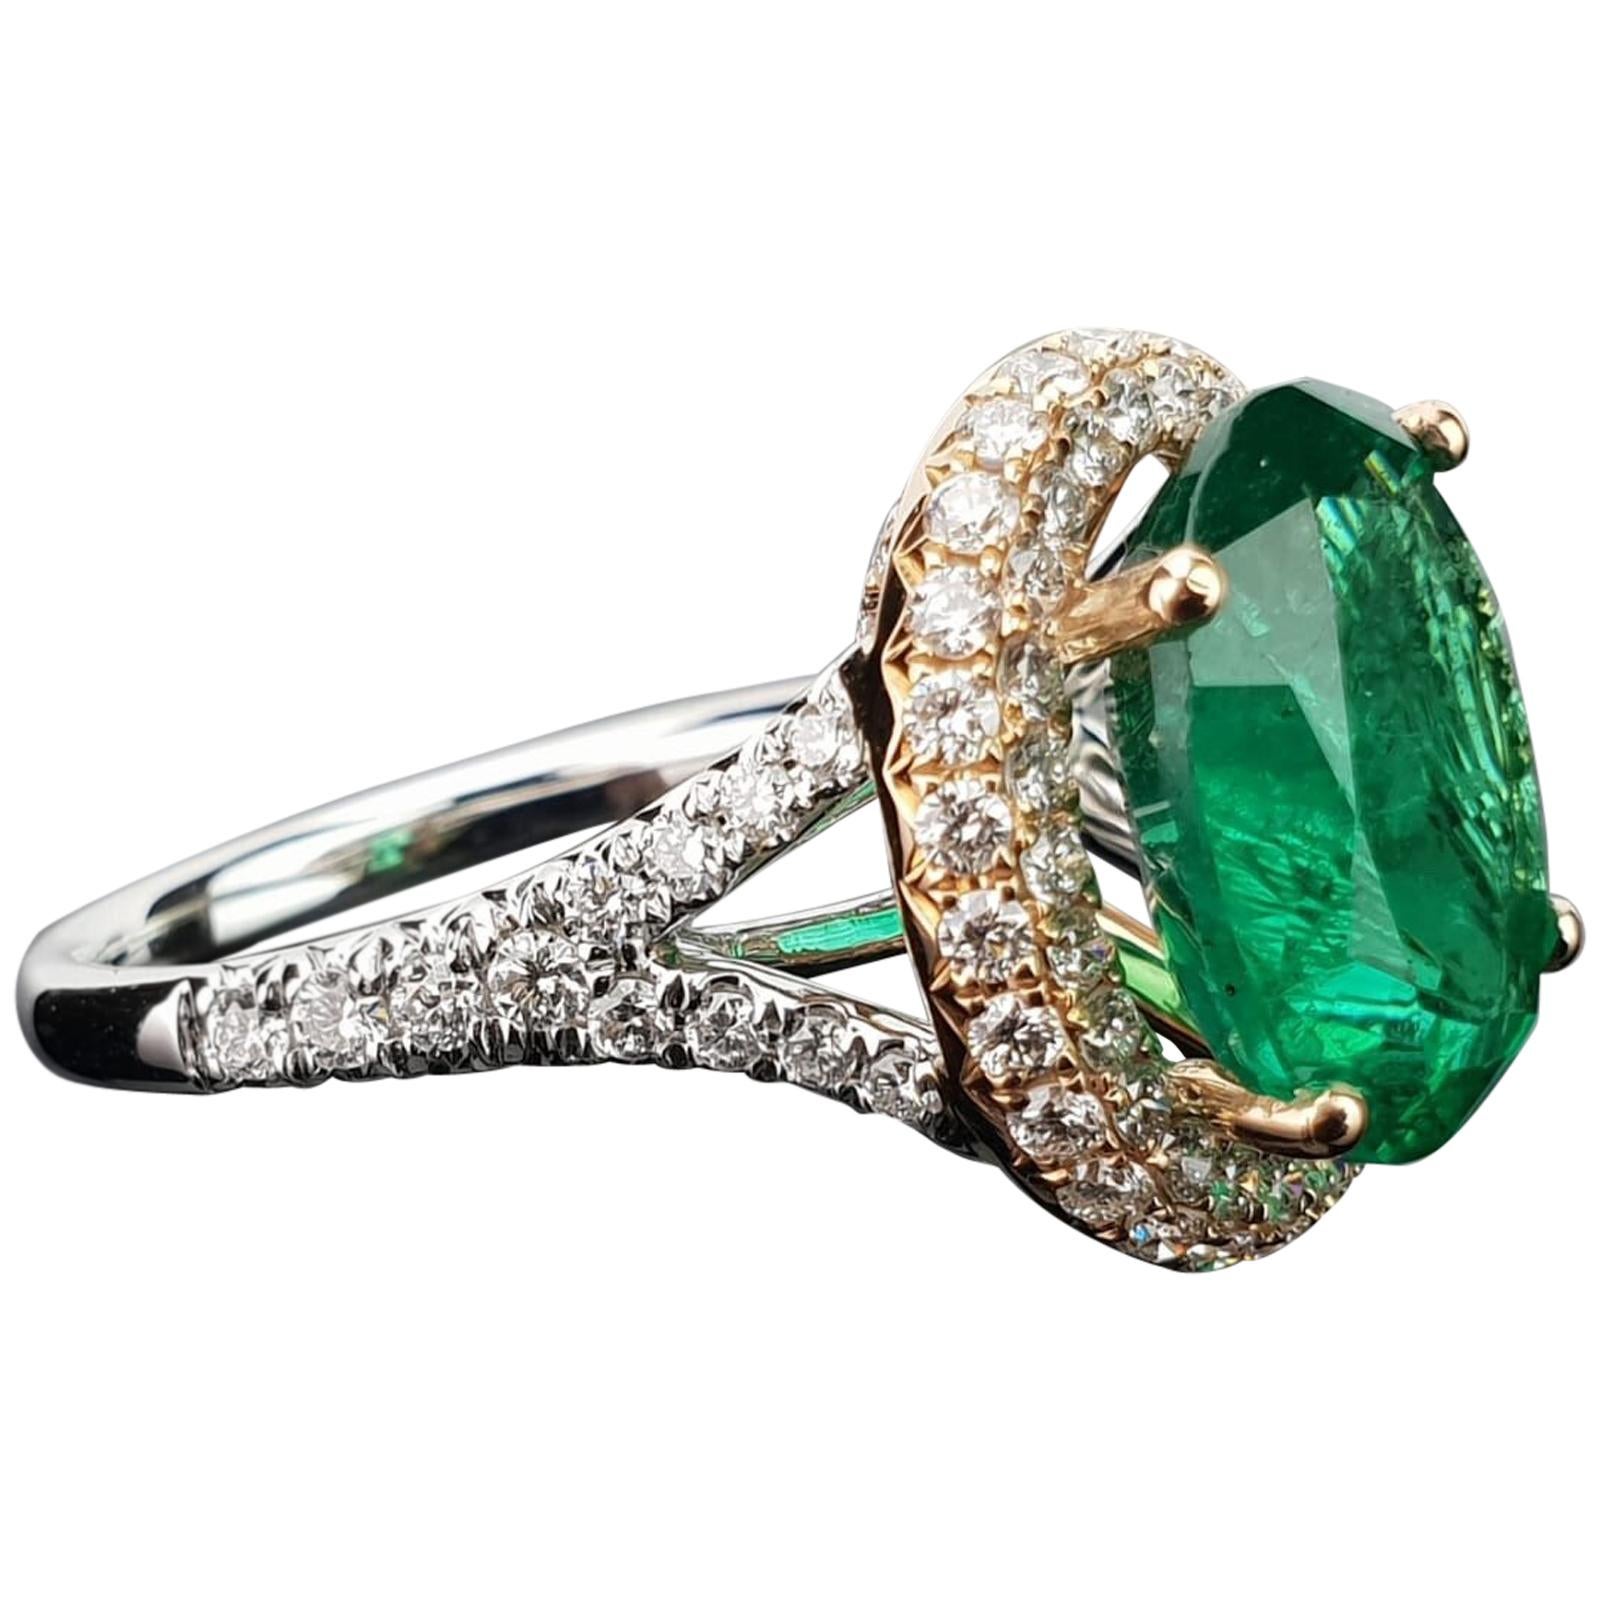 5.46 Carat Emerald and Diamond 18 Karat White and Rose Gold Cocktail Ring